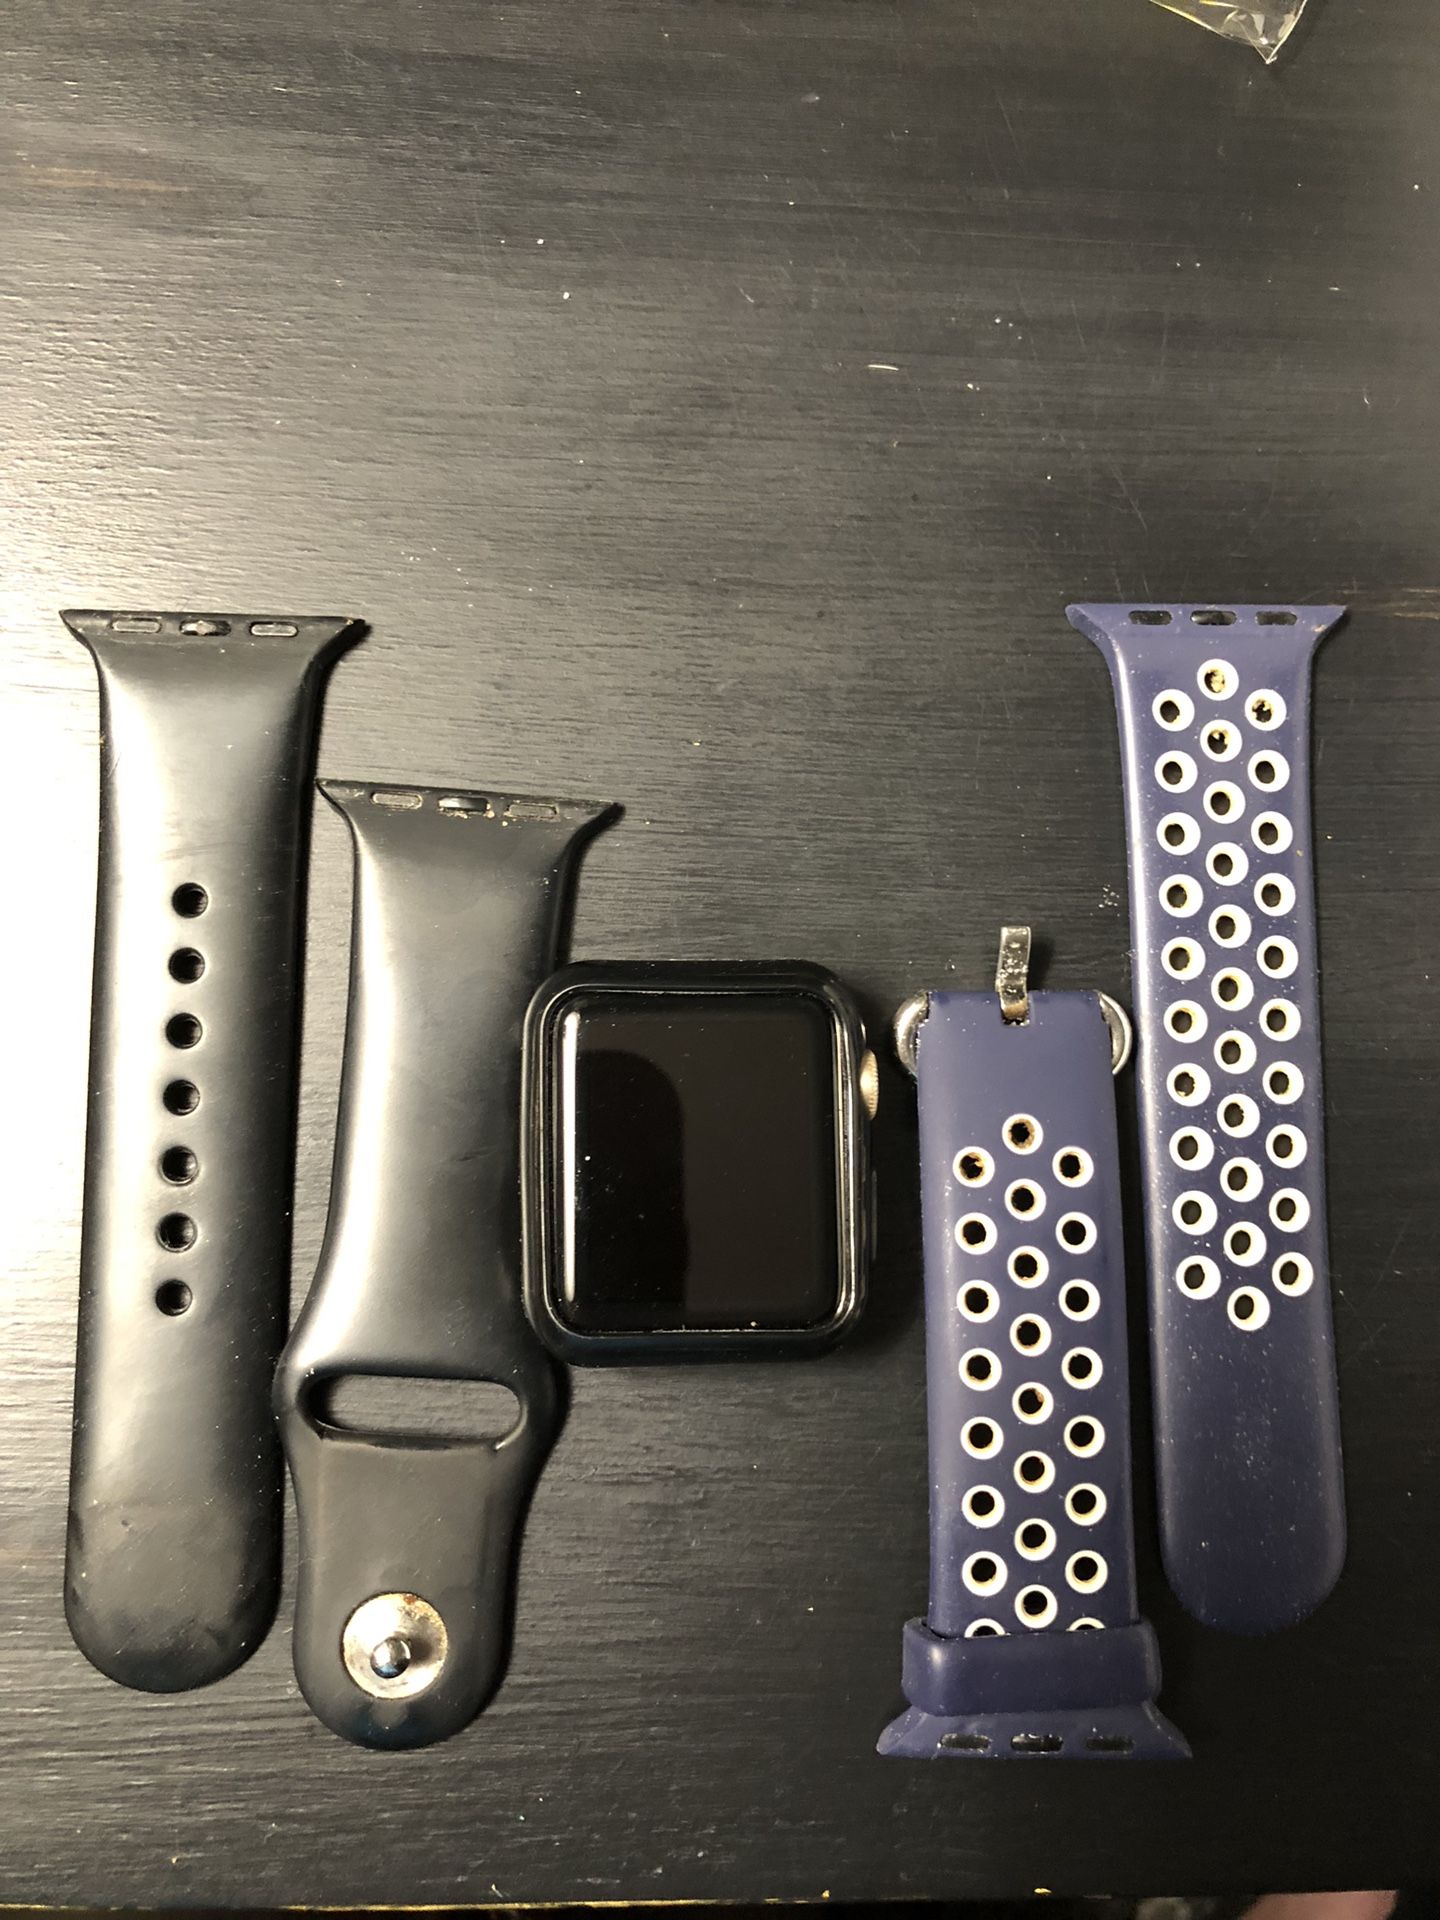 Apple iphone, iwatch and ipad Mini